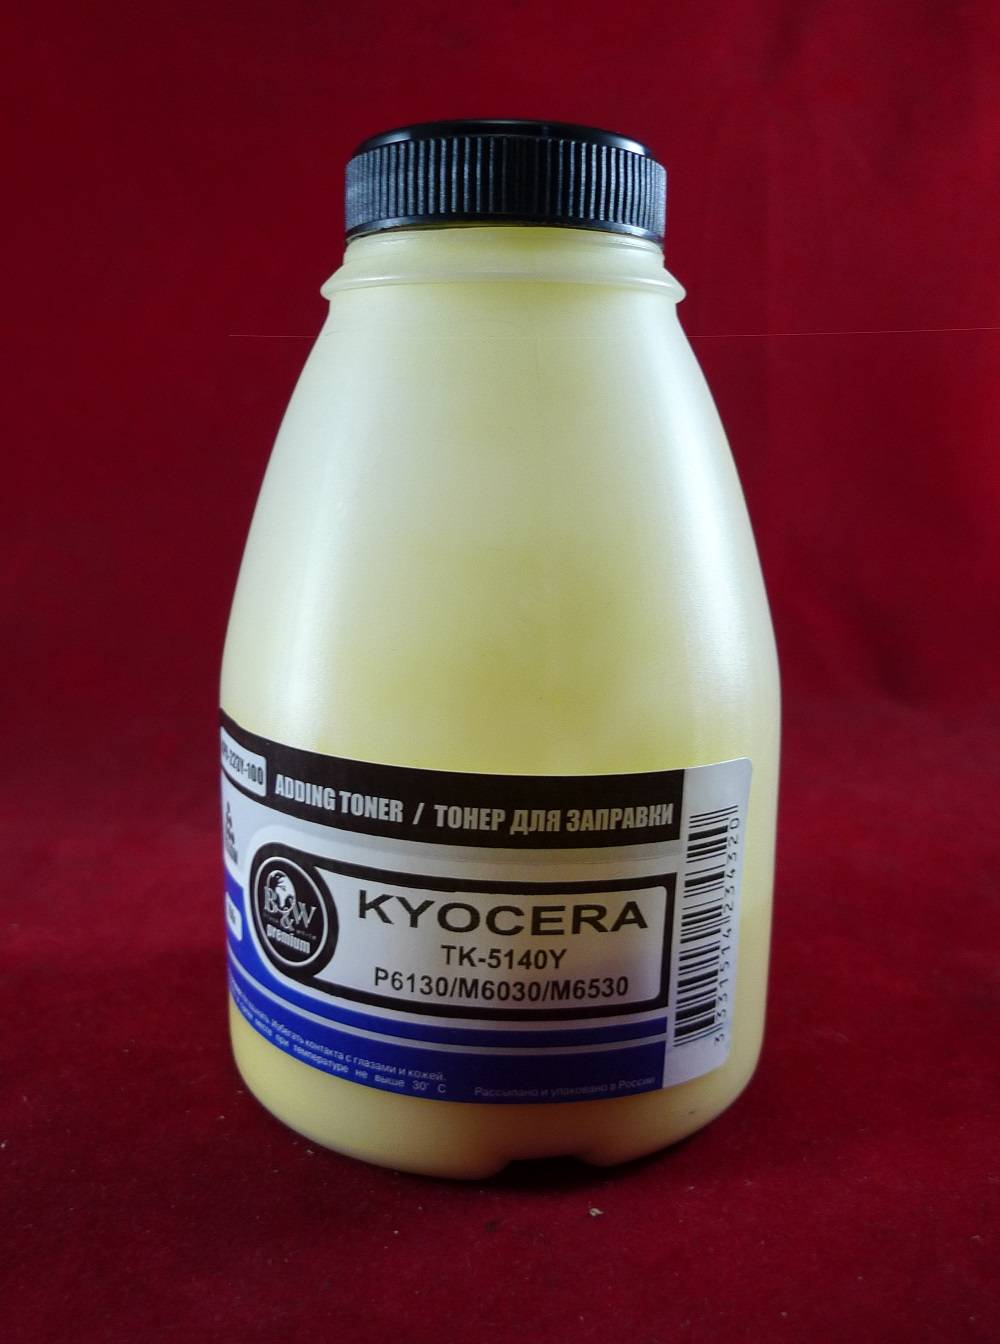 Тонер для Kyocera TK-5140Y, P6130/M6030/M6530 Yellow (фл. 100г) 5K Black&White Premium - купить с доставкой по России